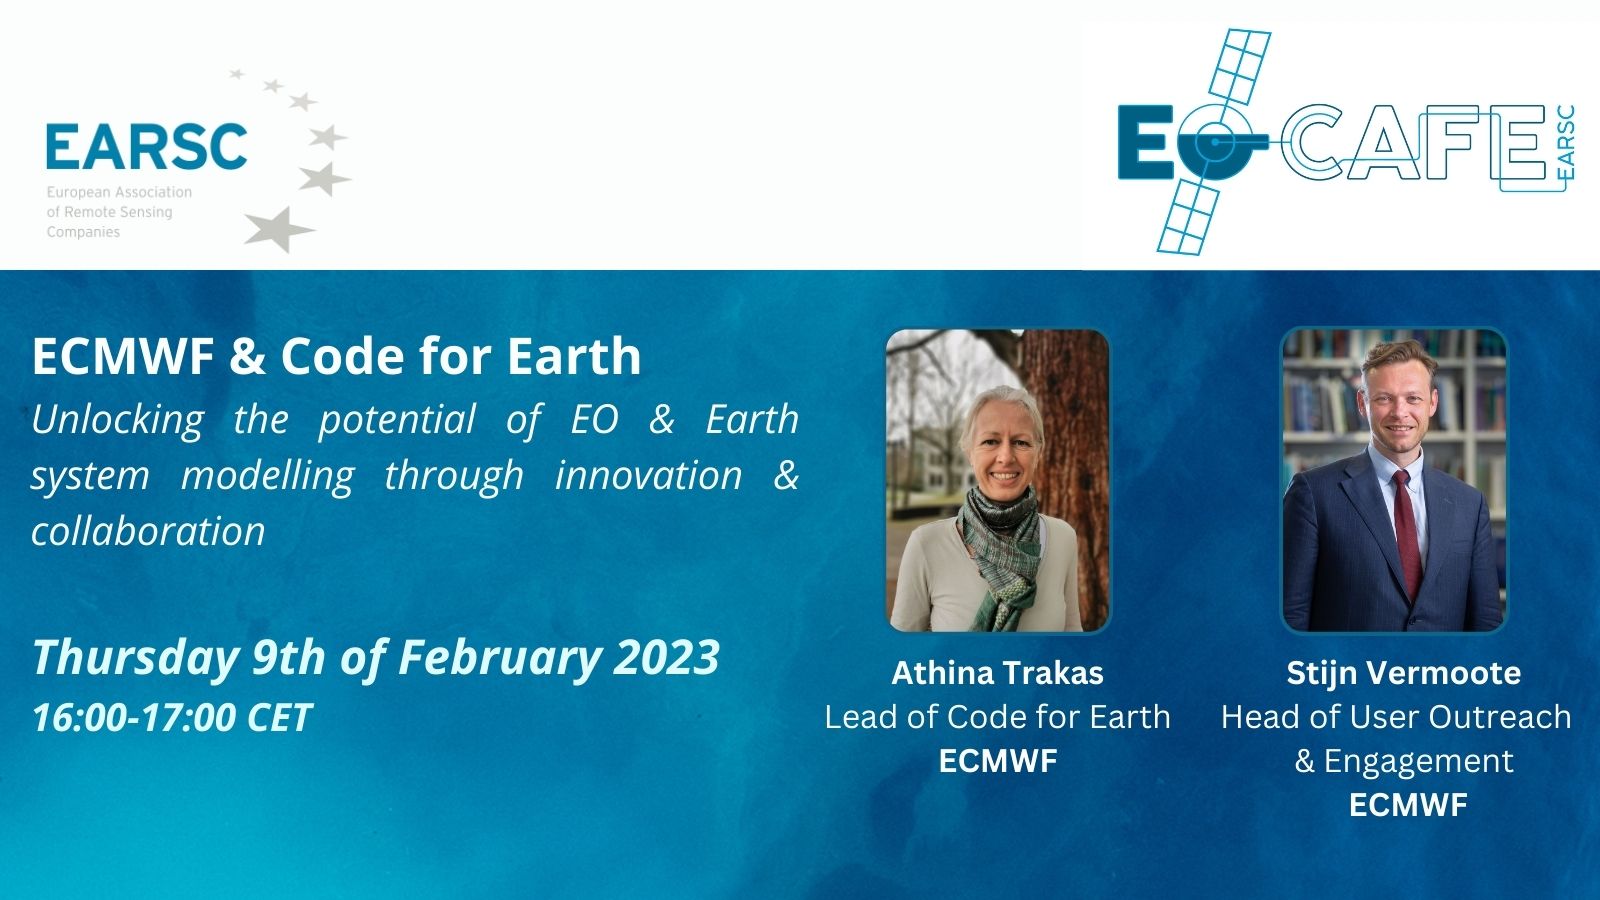 EOcafe: ECMWF & Code for Earth